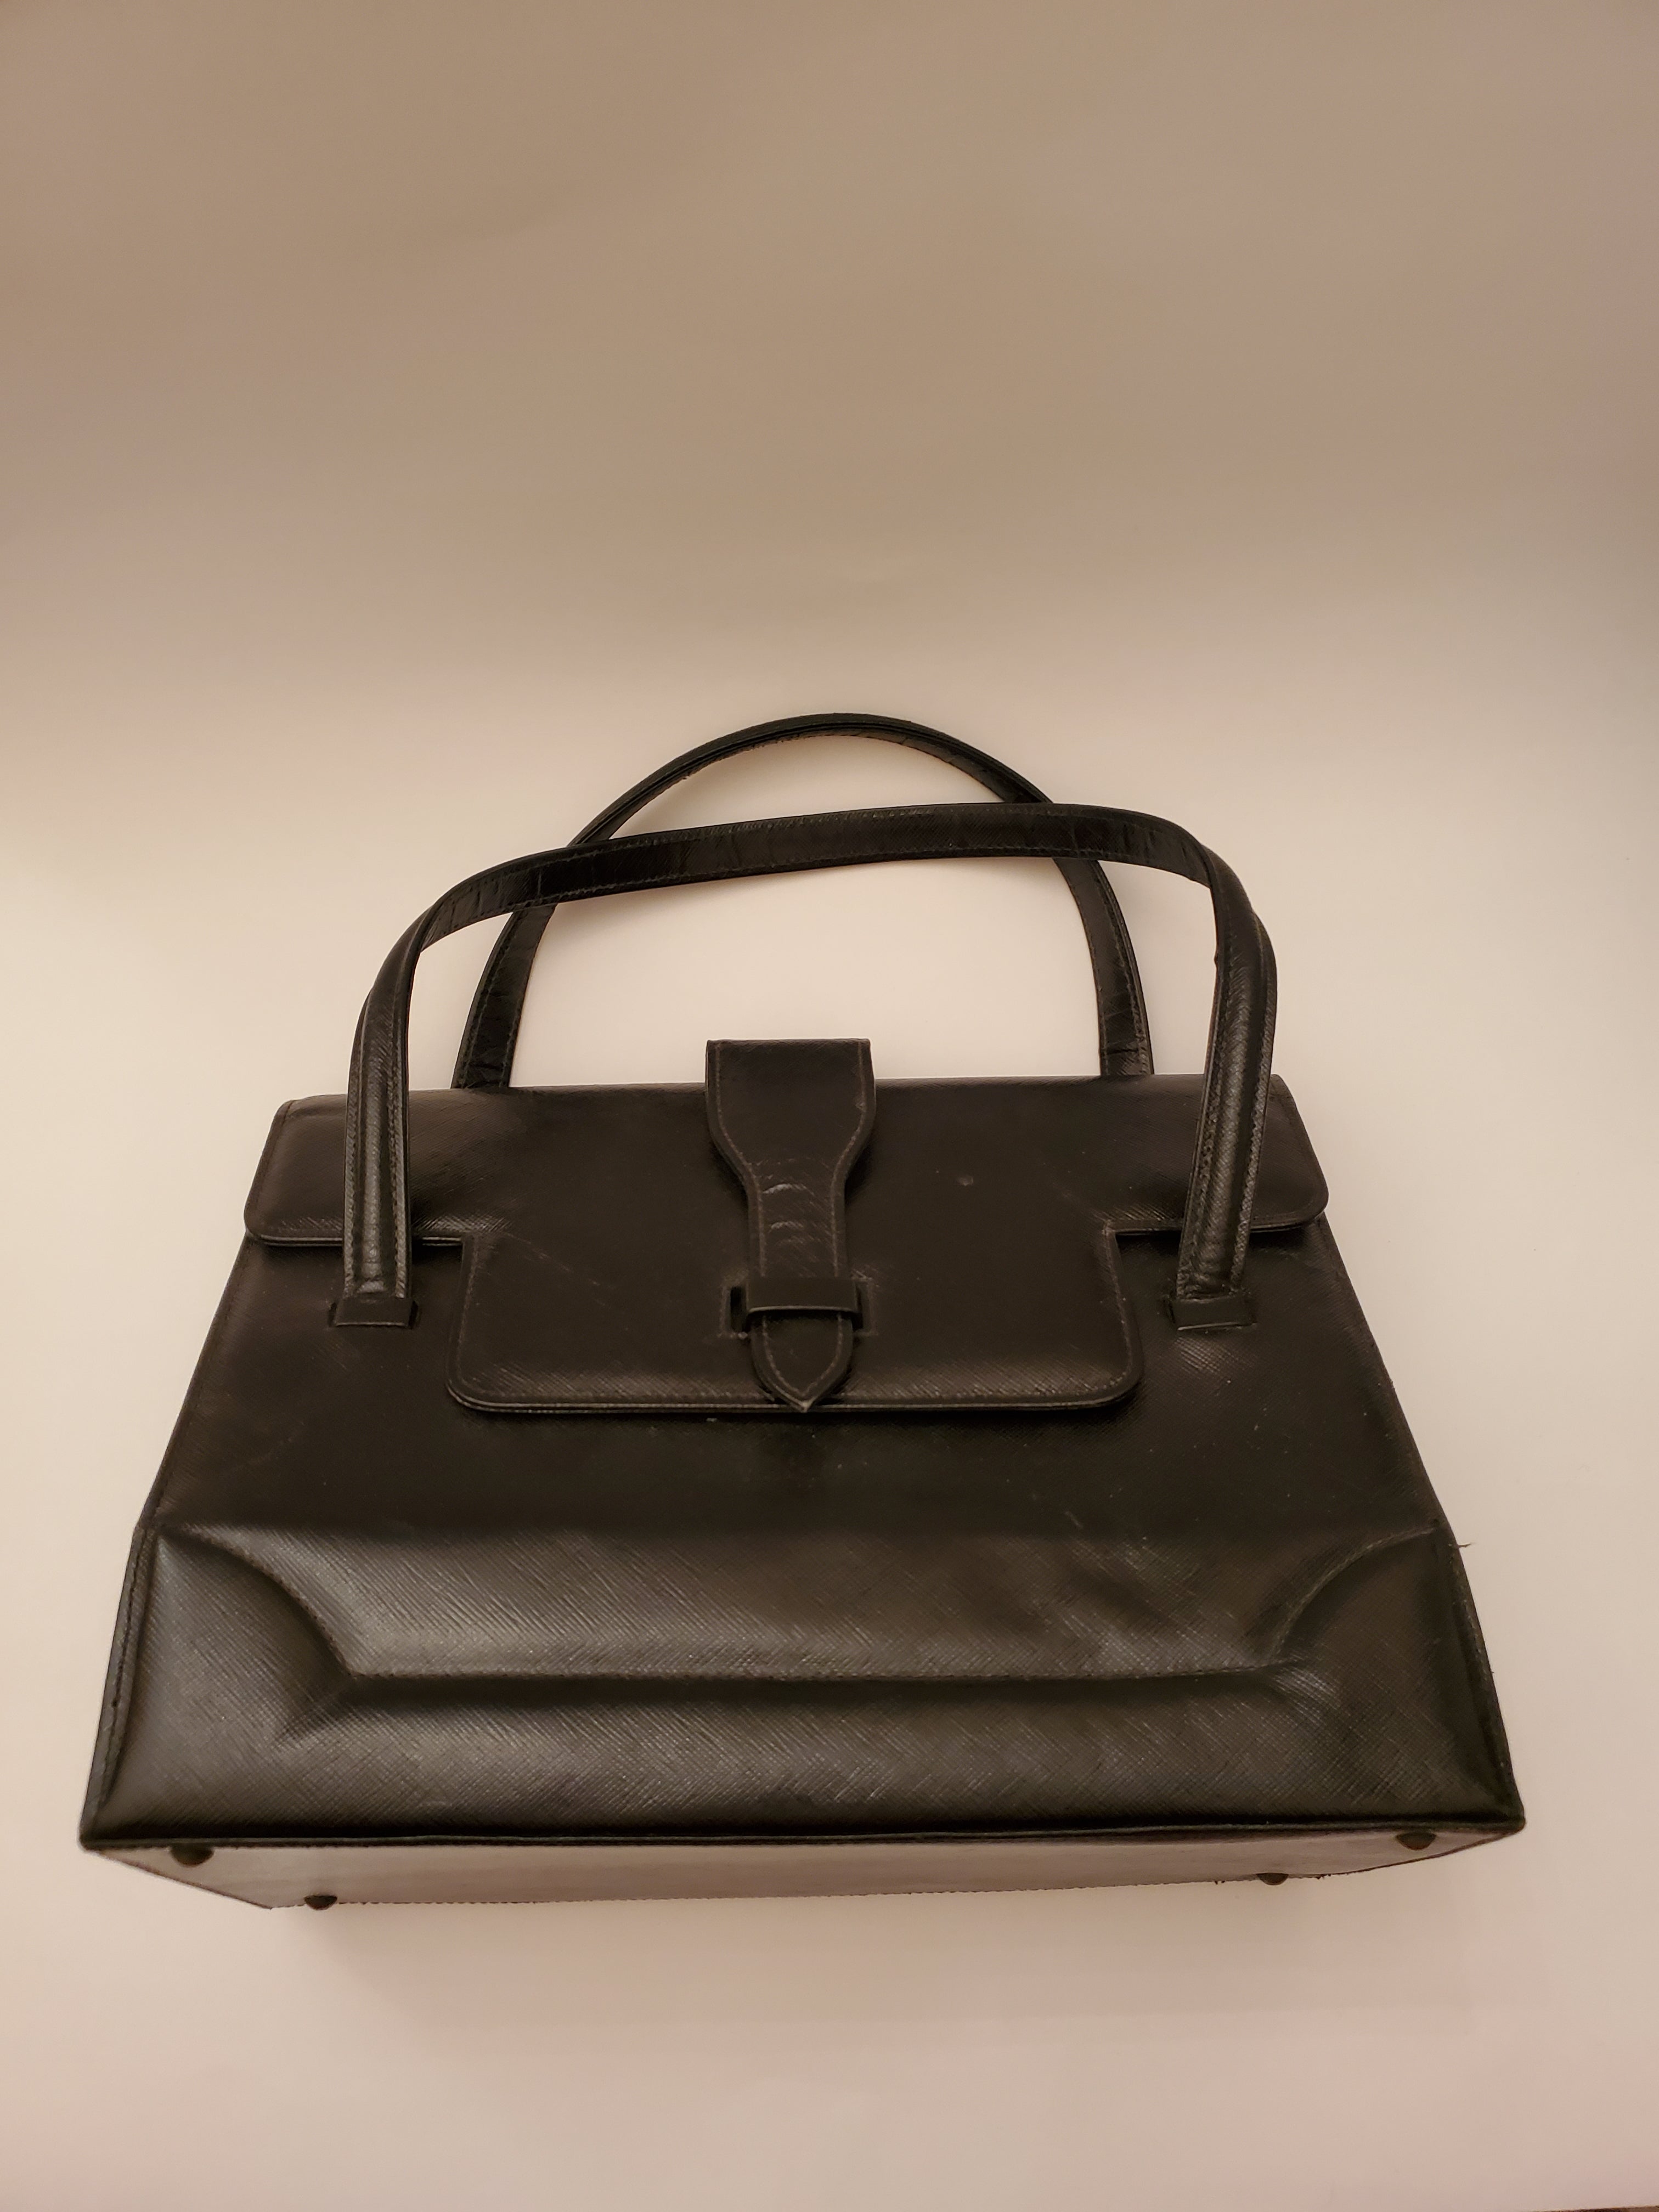 Saks Fifth Avenue Handbags : Bags & Accessories - Walmart.com